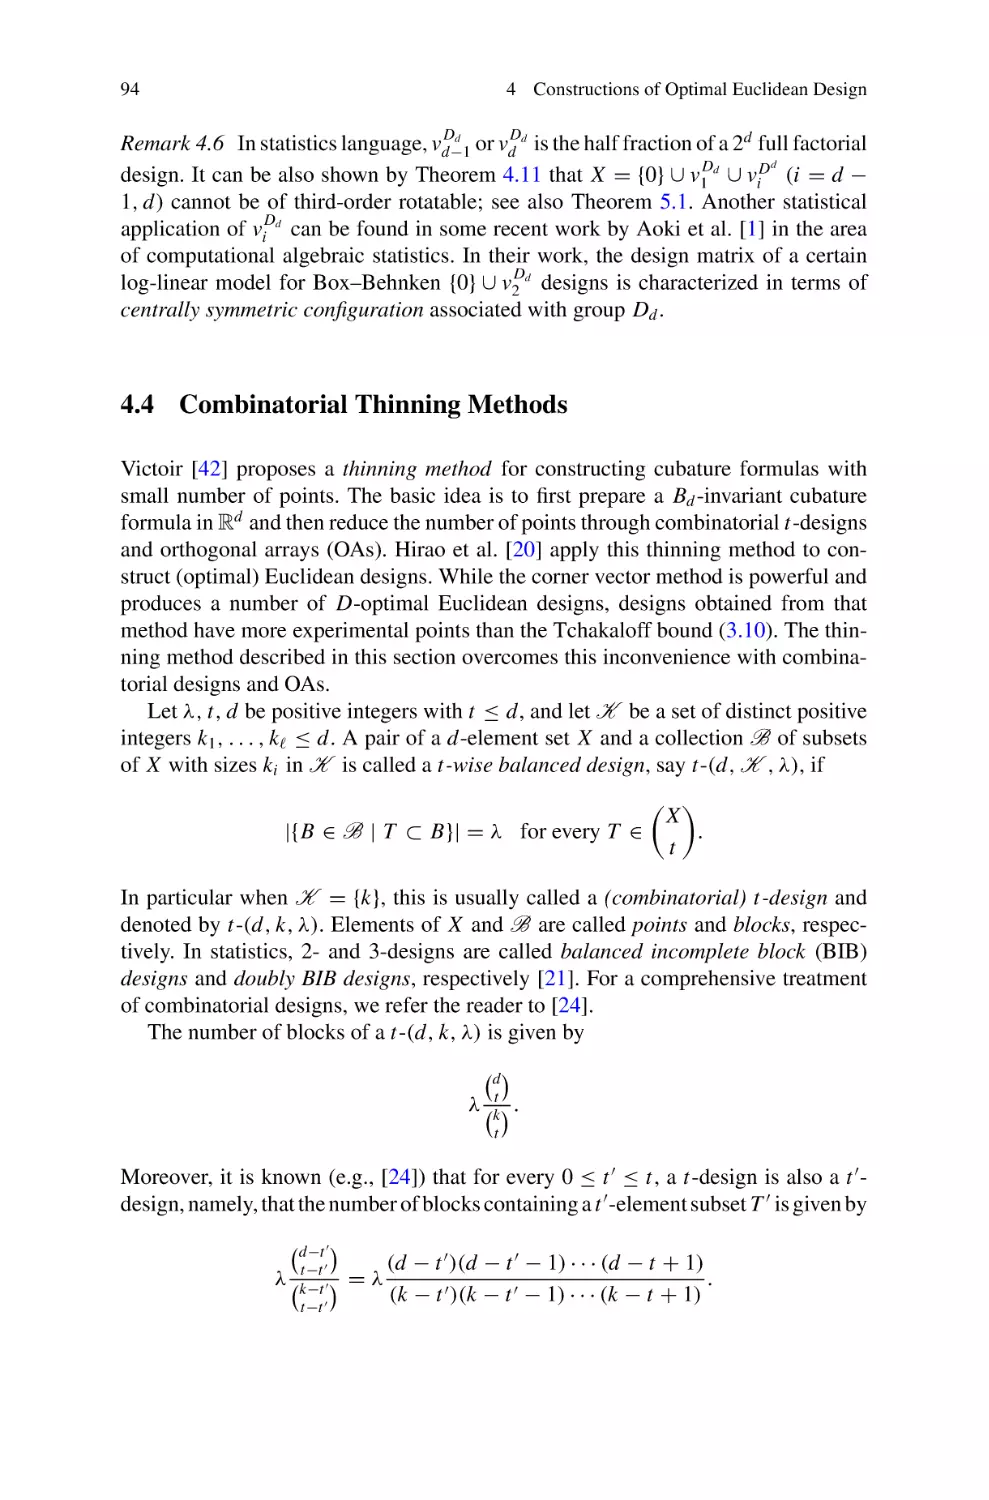 4.4 Combinatorial Thinning Methods